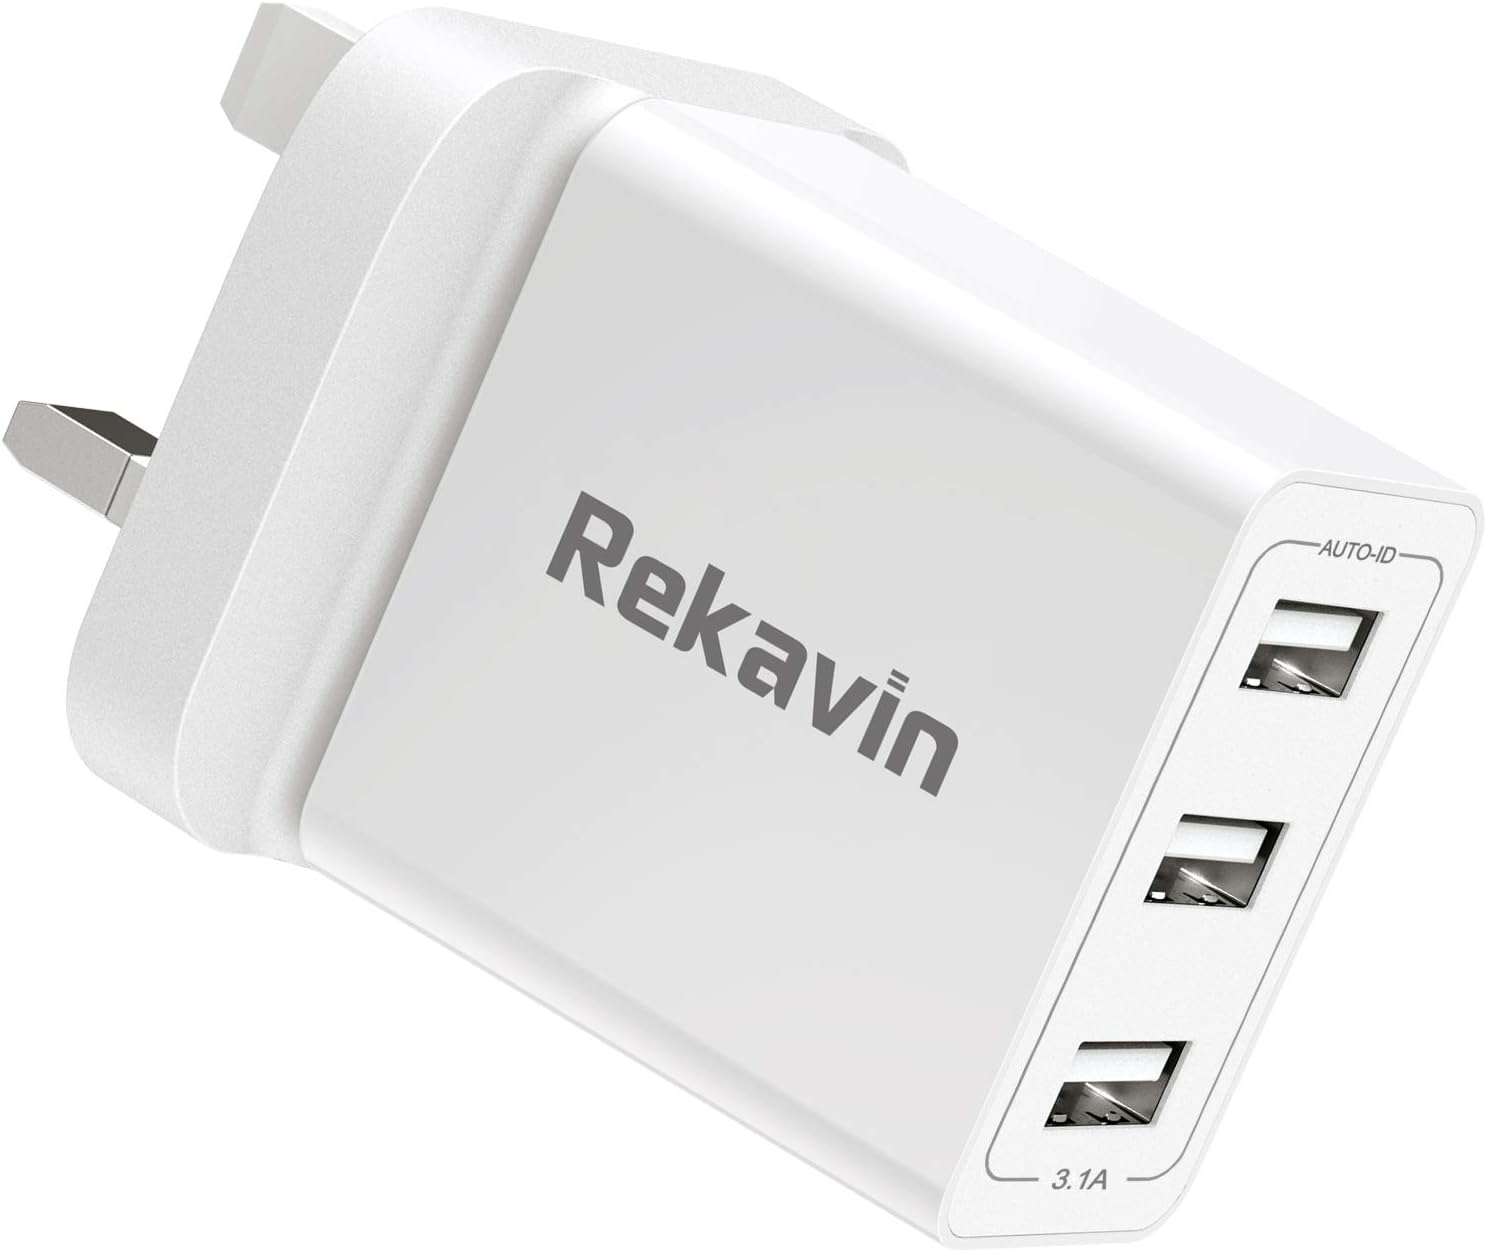 Rekavin USB Plug 5V3A 15W Plug